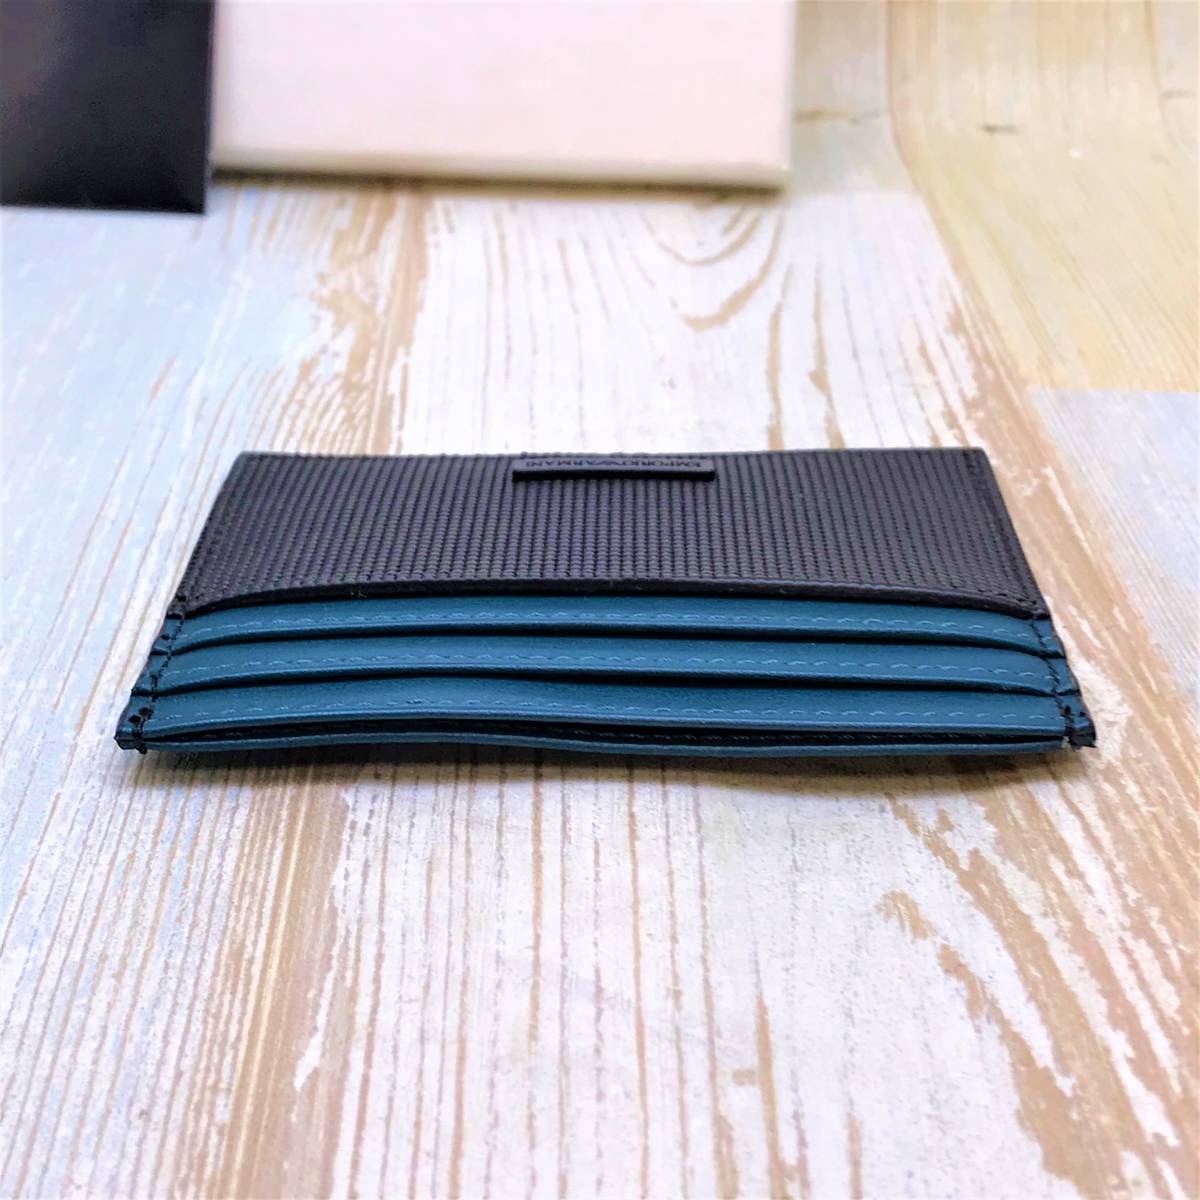  new goods *EMPORIO ARMANI Emporio Armani leather card-case pass case black green 